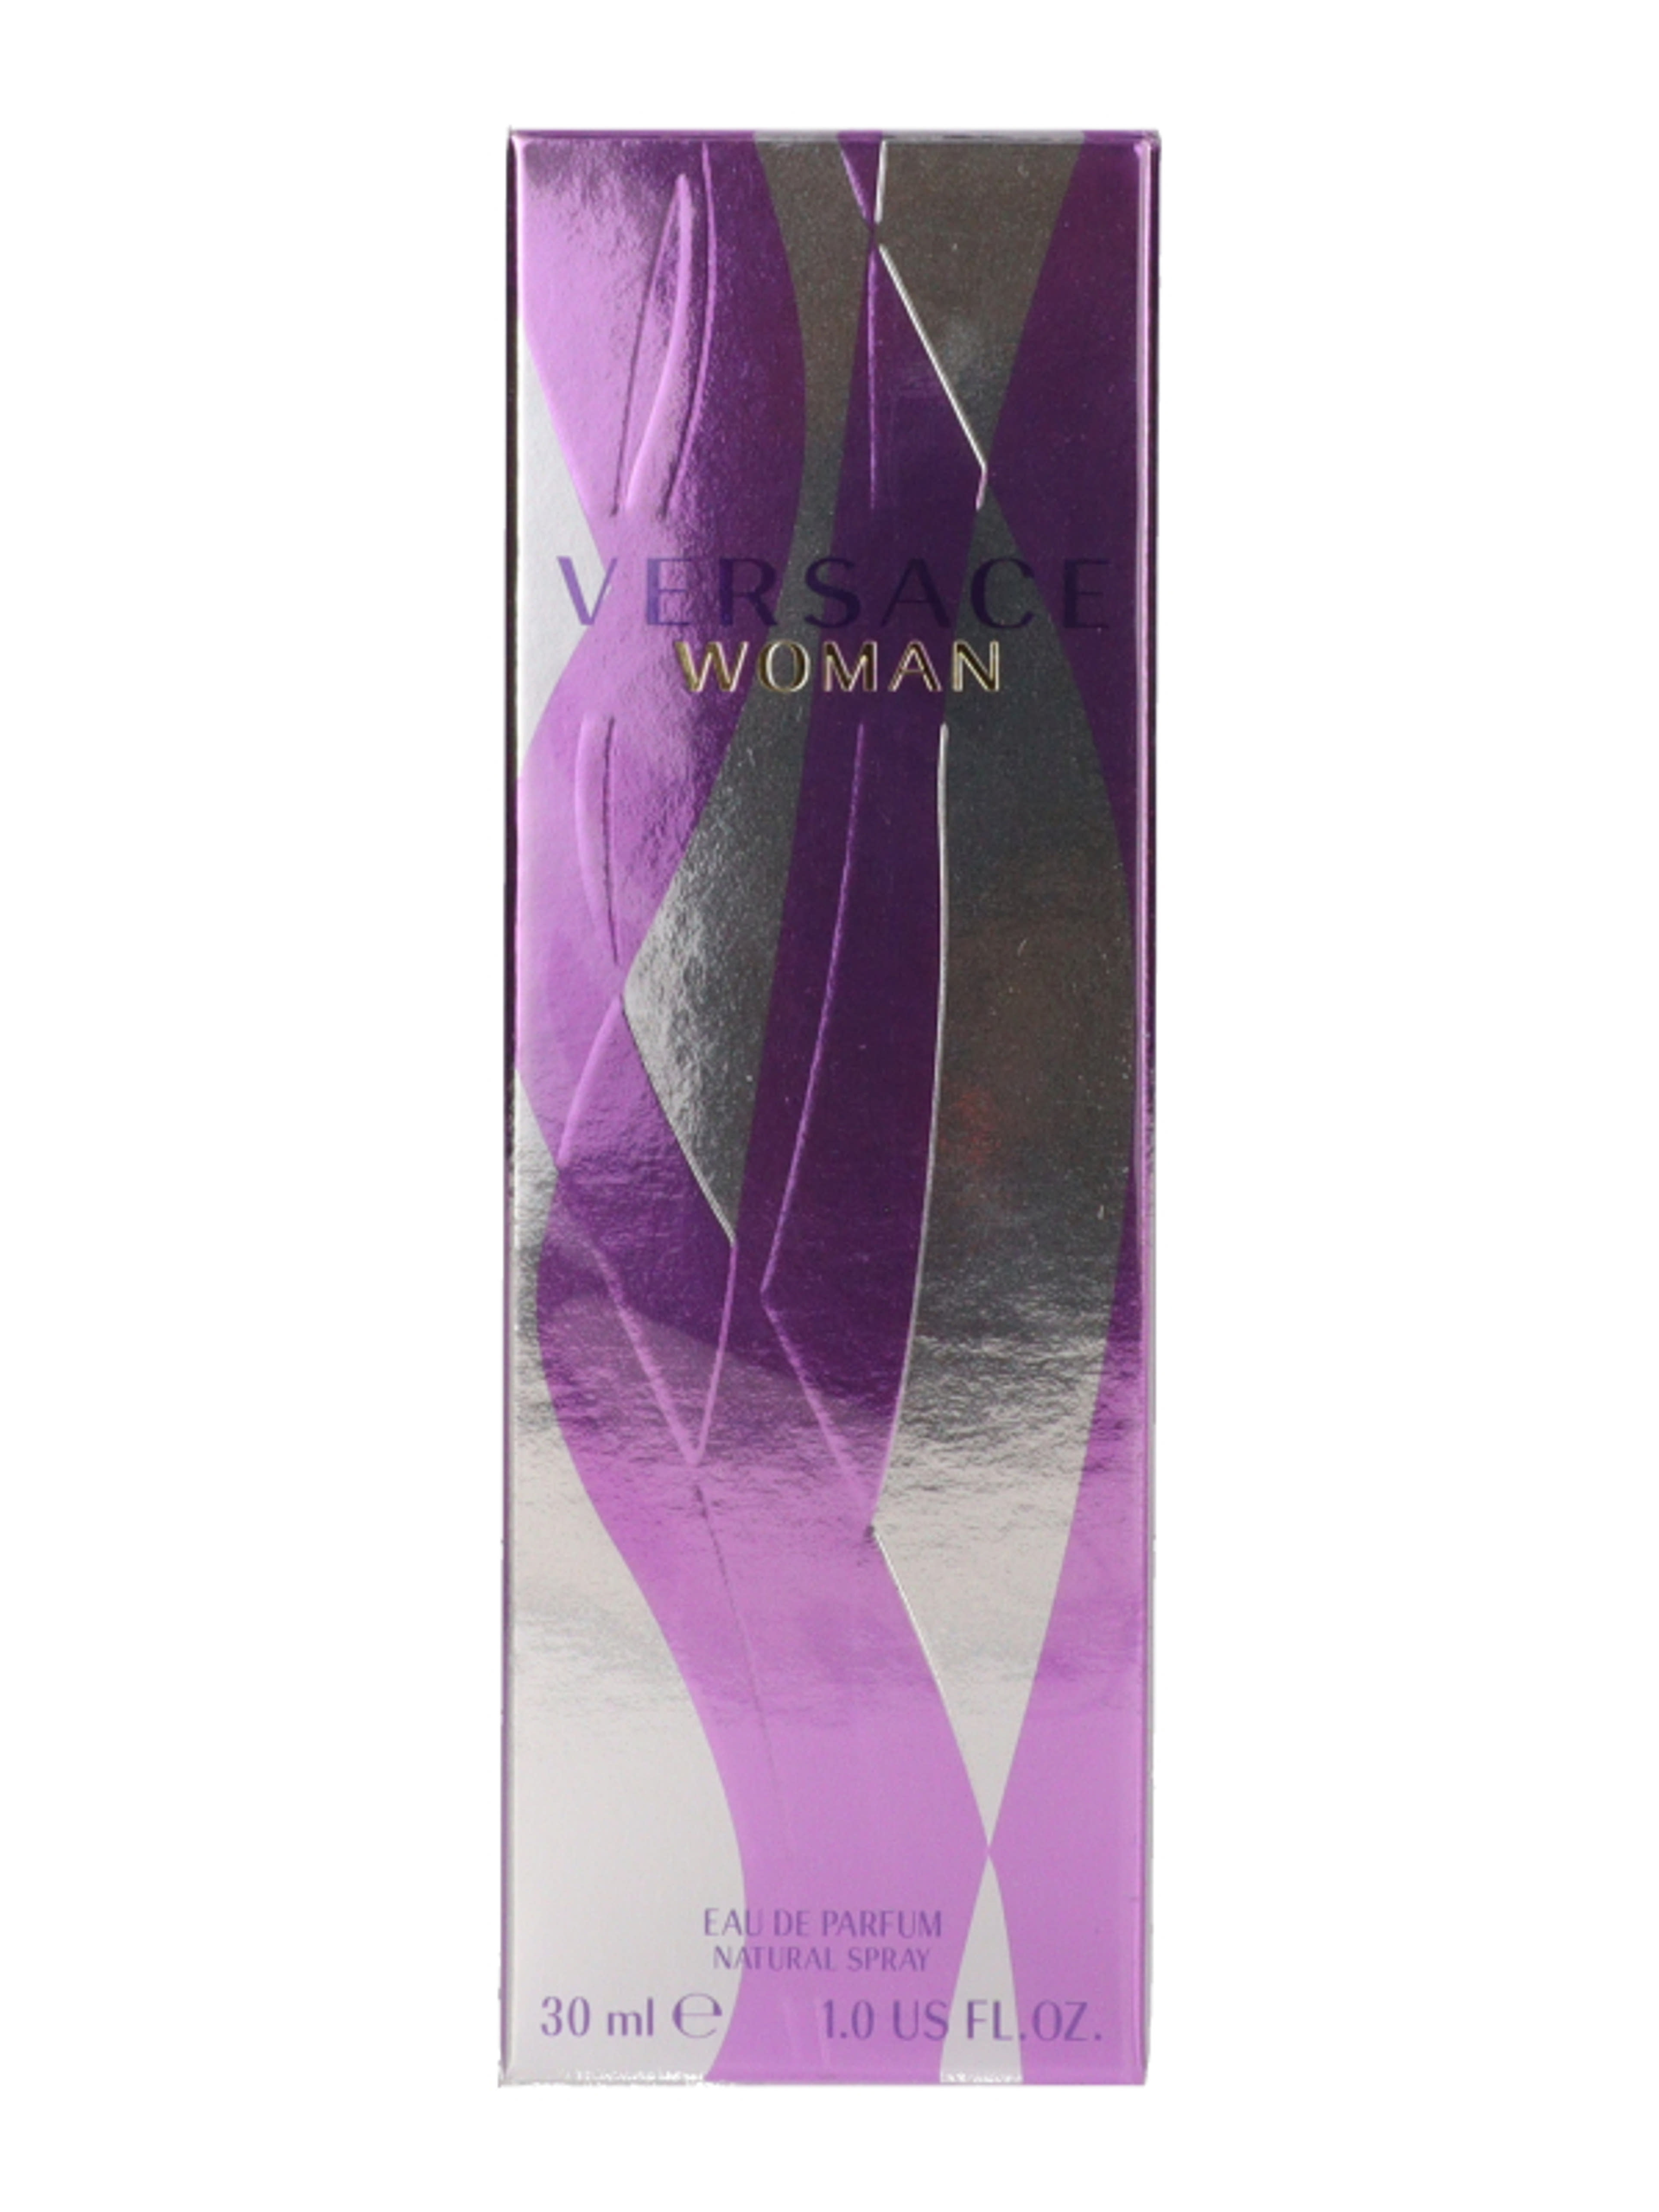 Versace Women Eau de Parfum - 30 ml